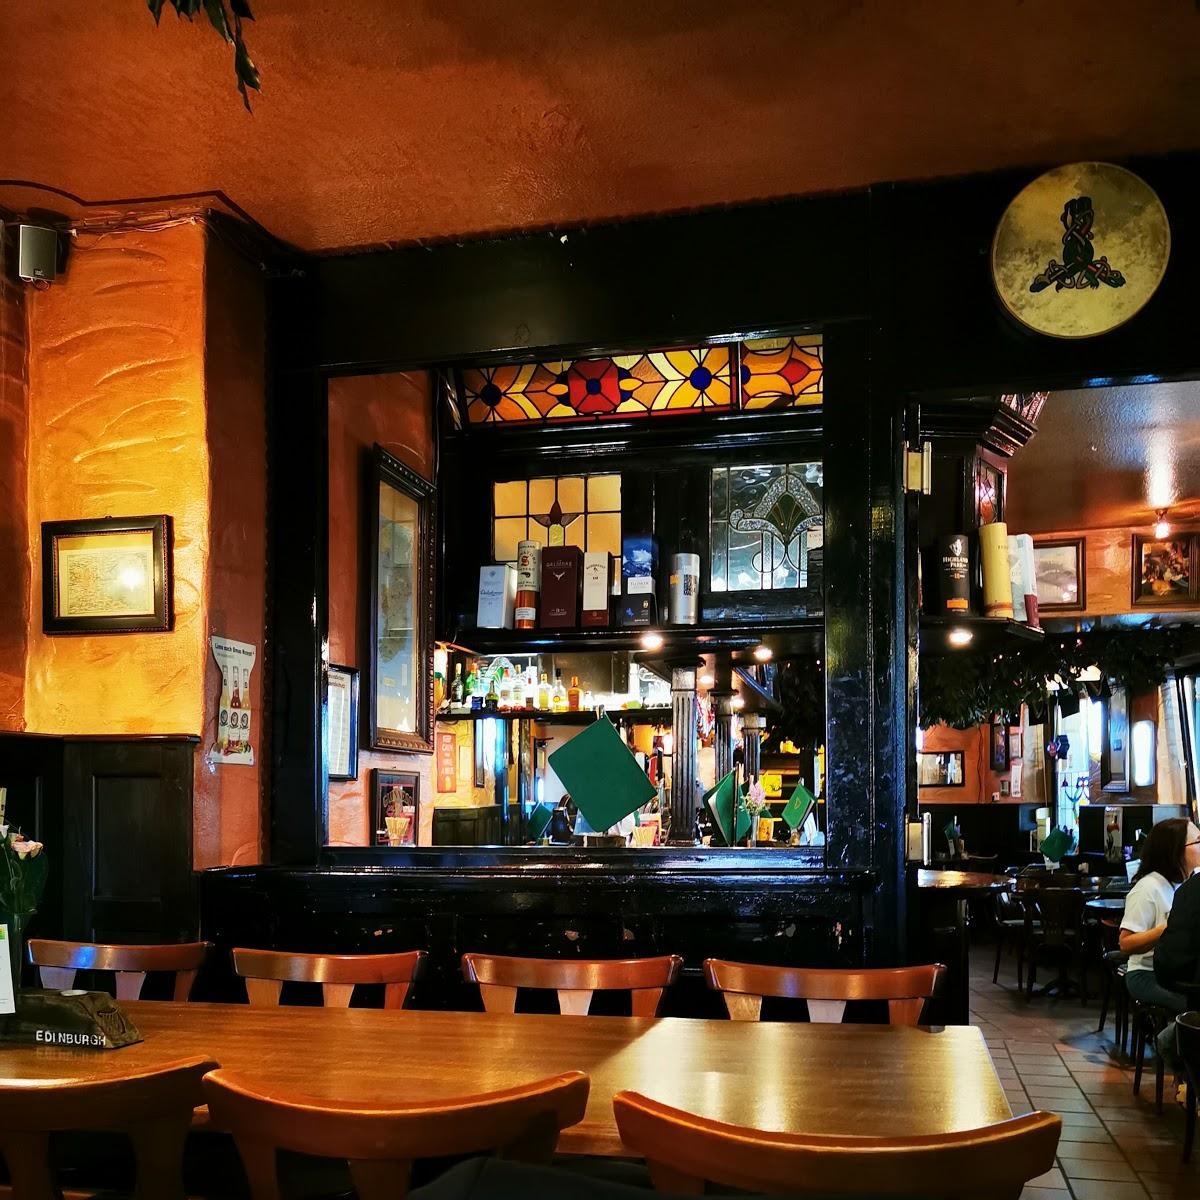 Restaurant "Finnegan’s Irish Pub" in Witten